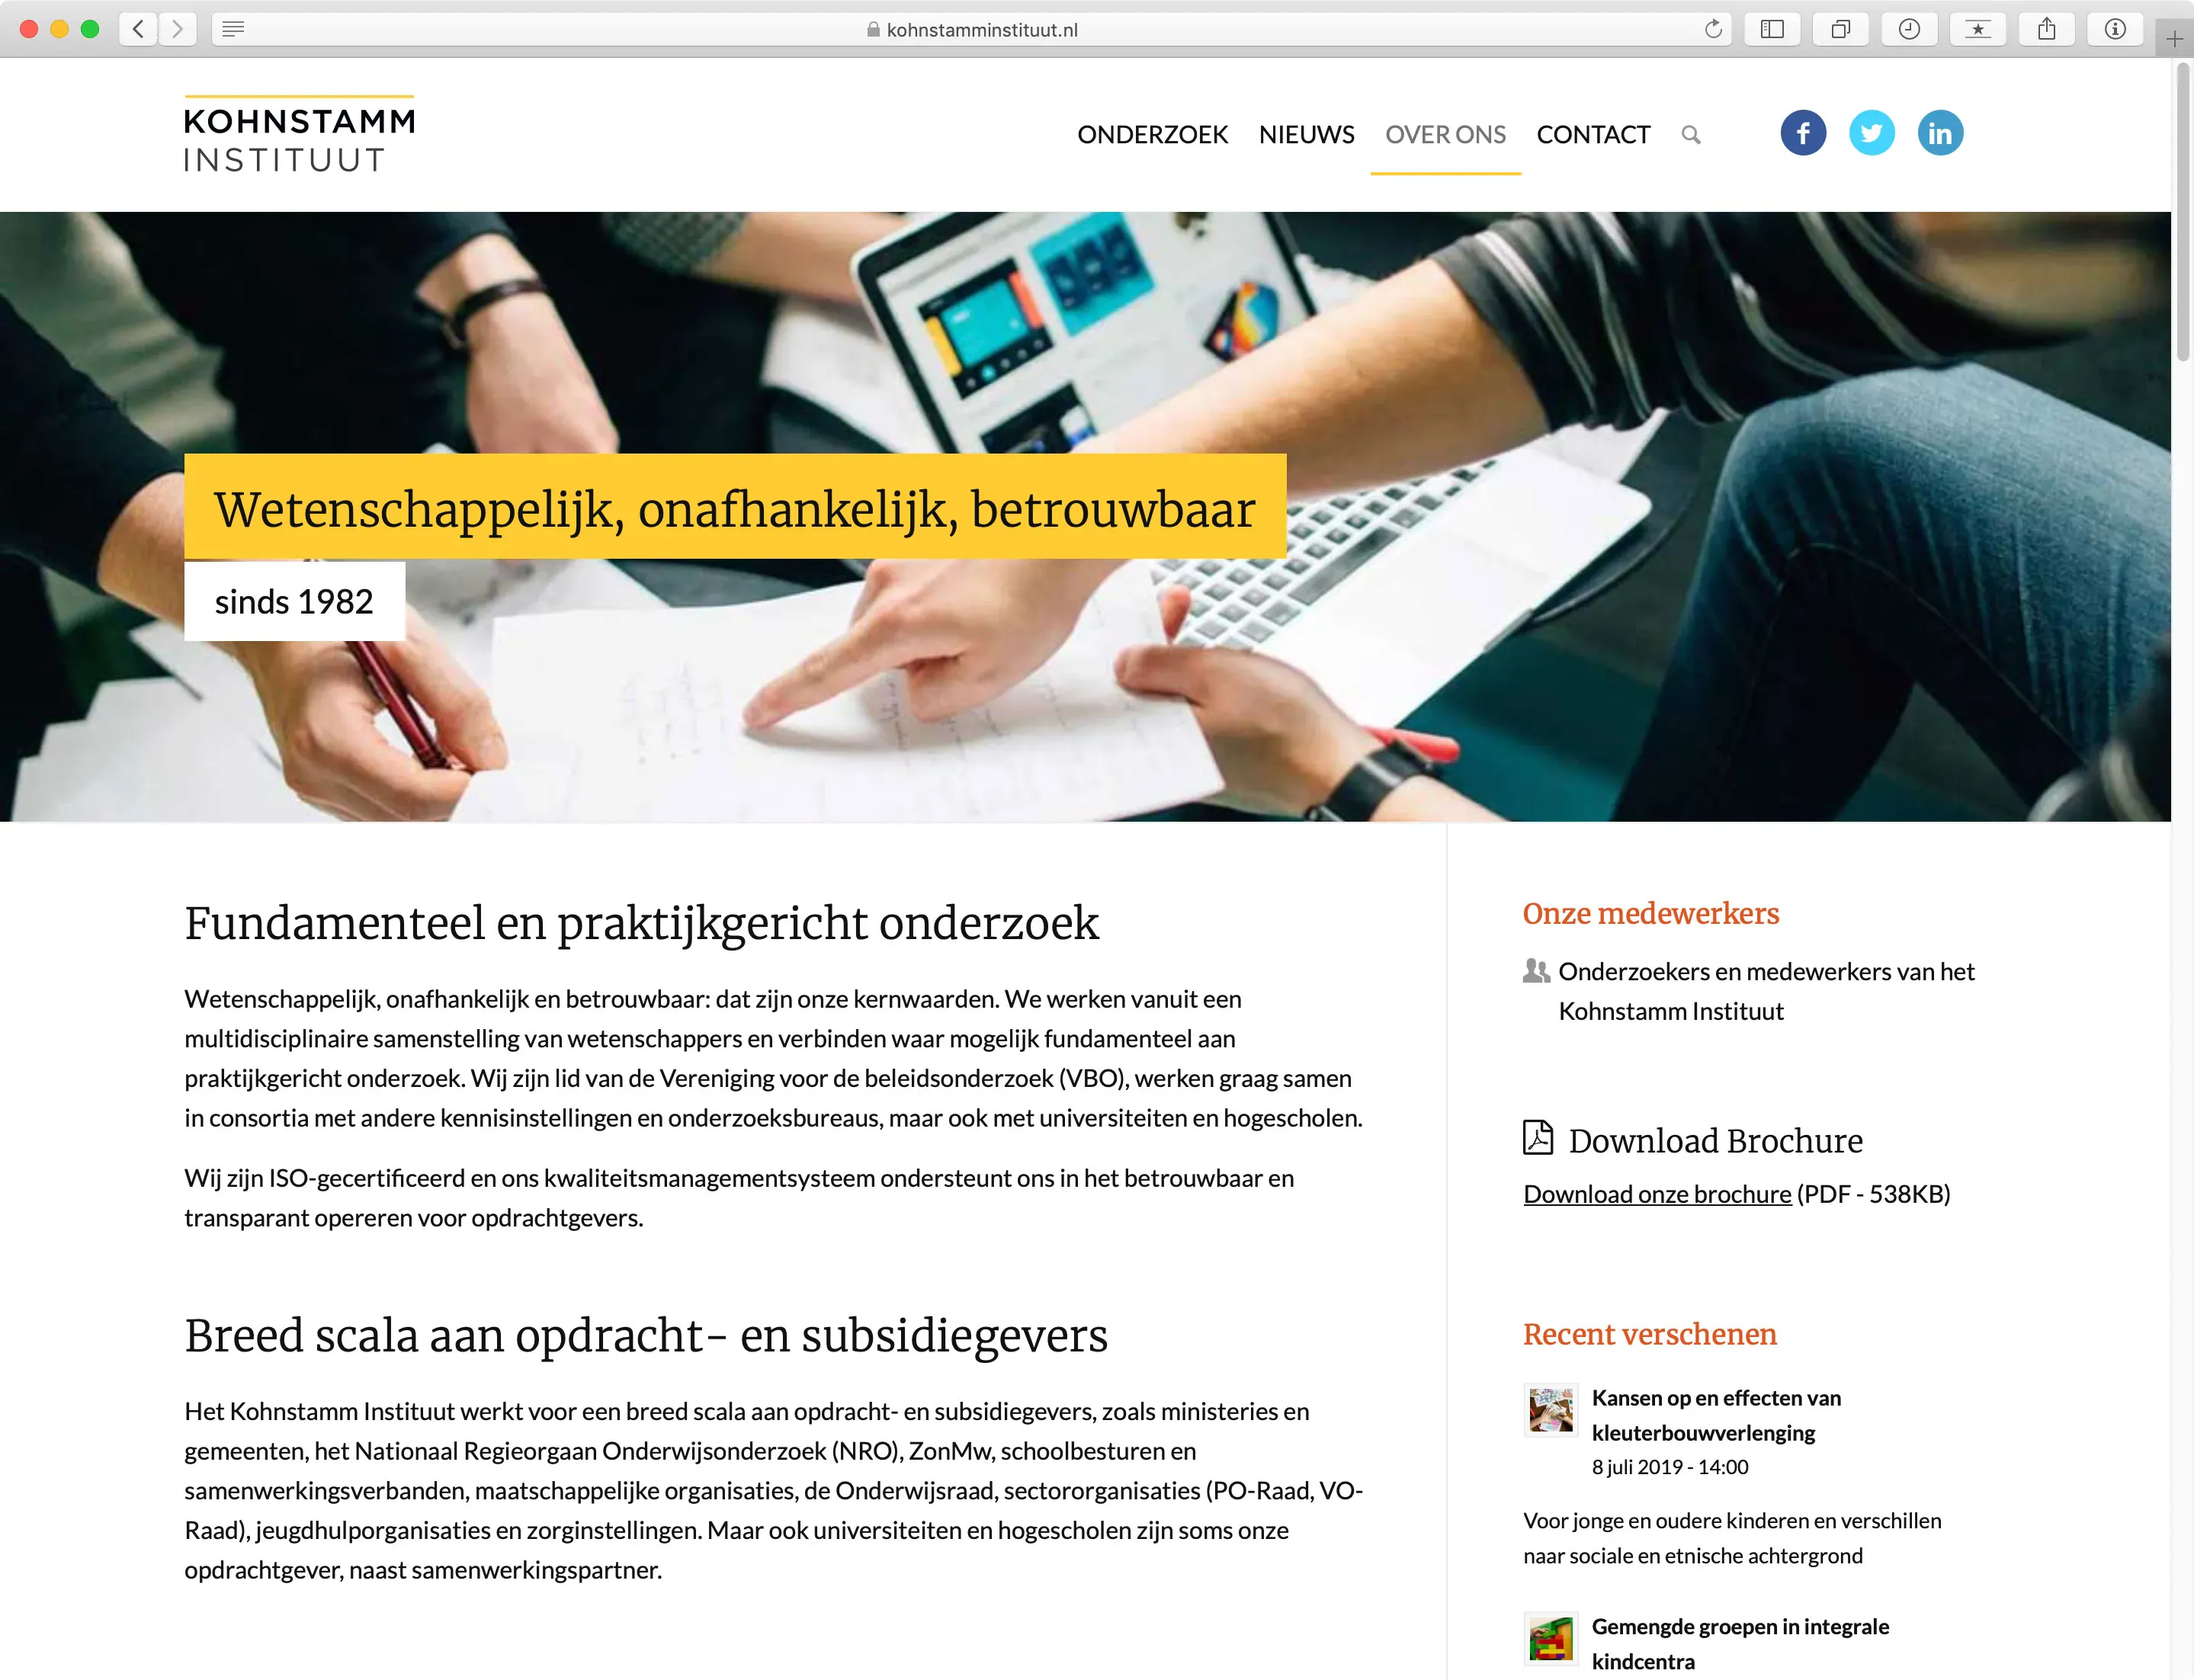 Website Kohnstamm Instituut - Pagina Over Ons